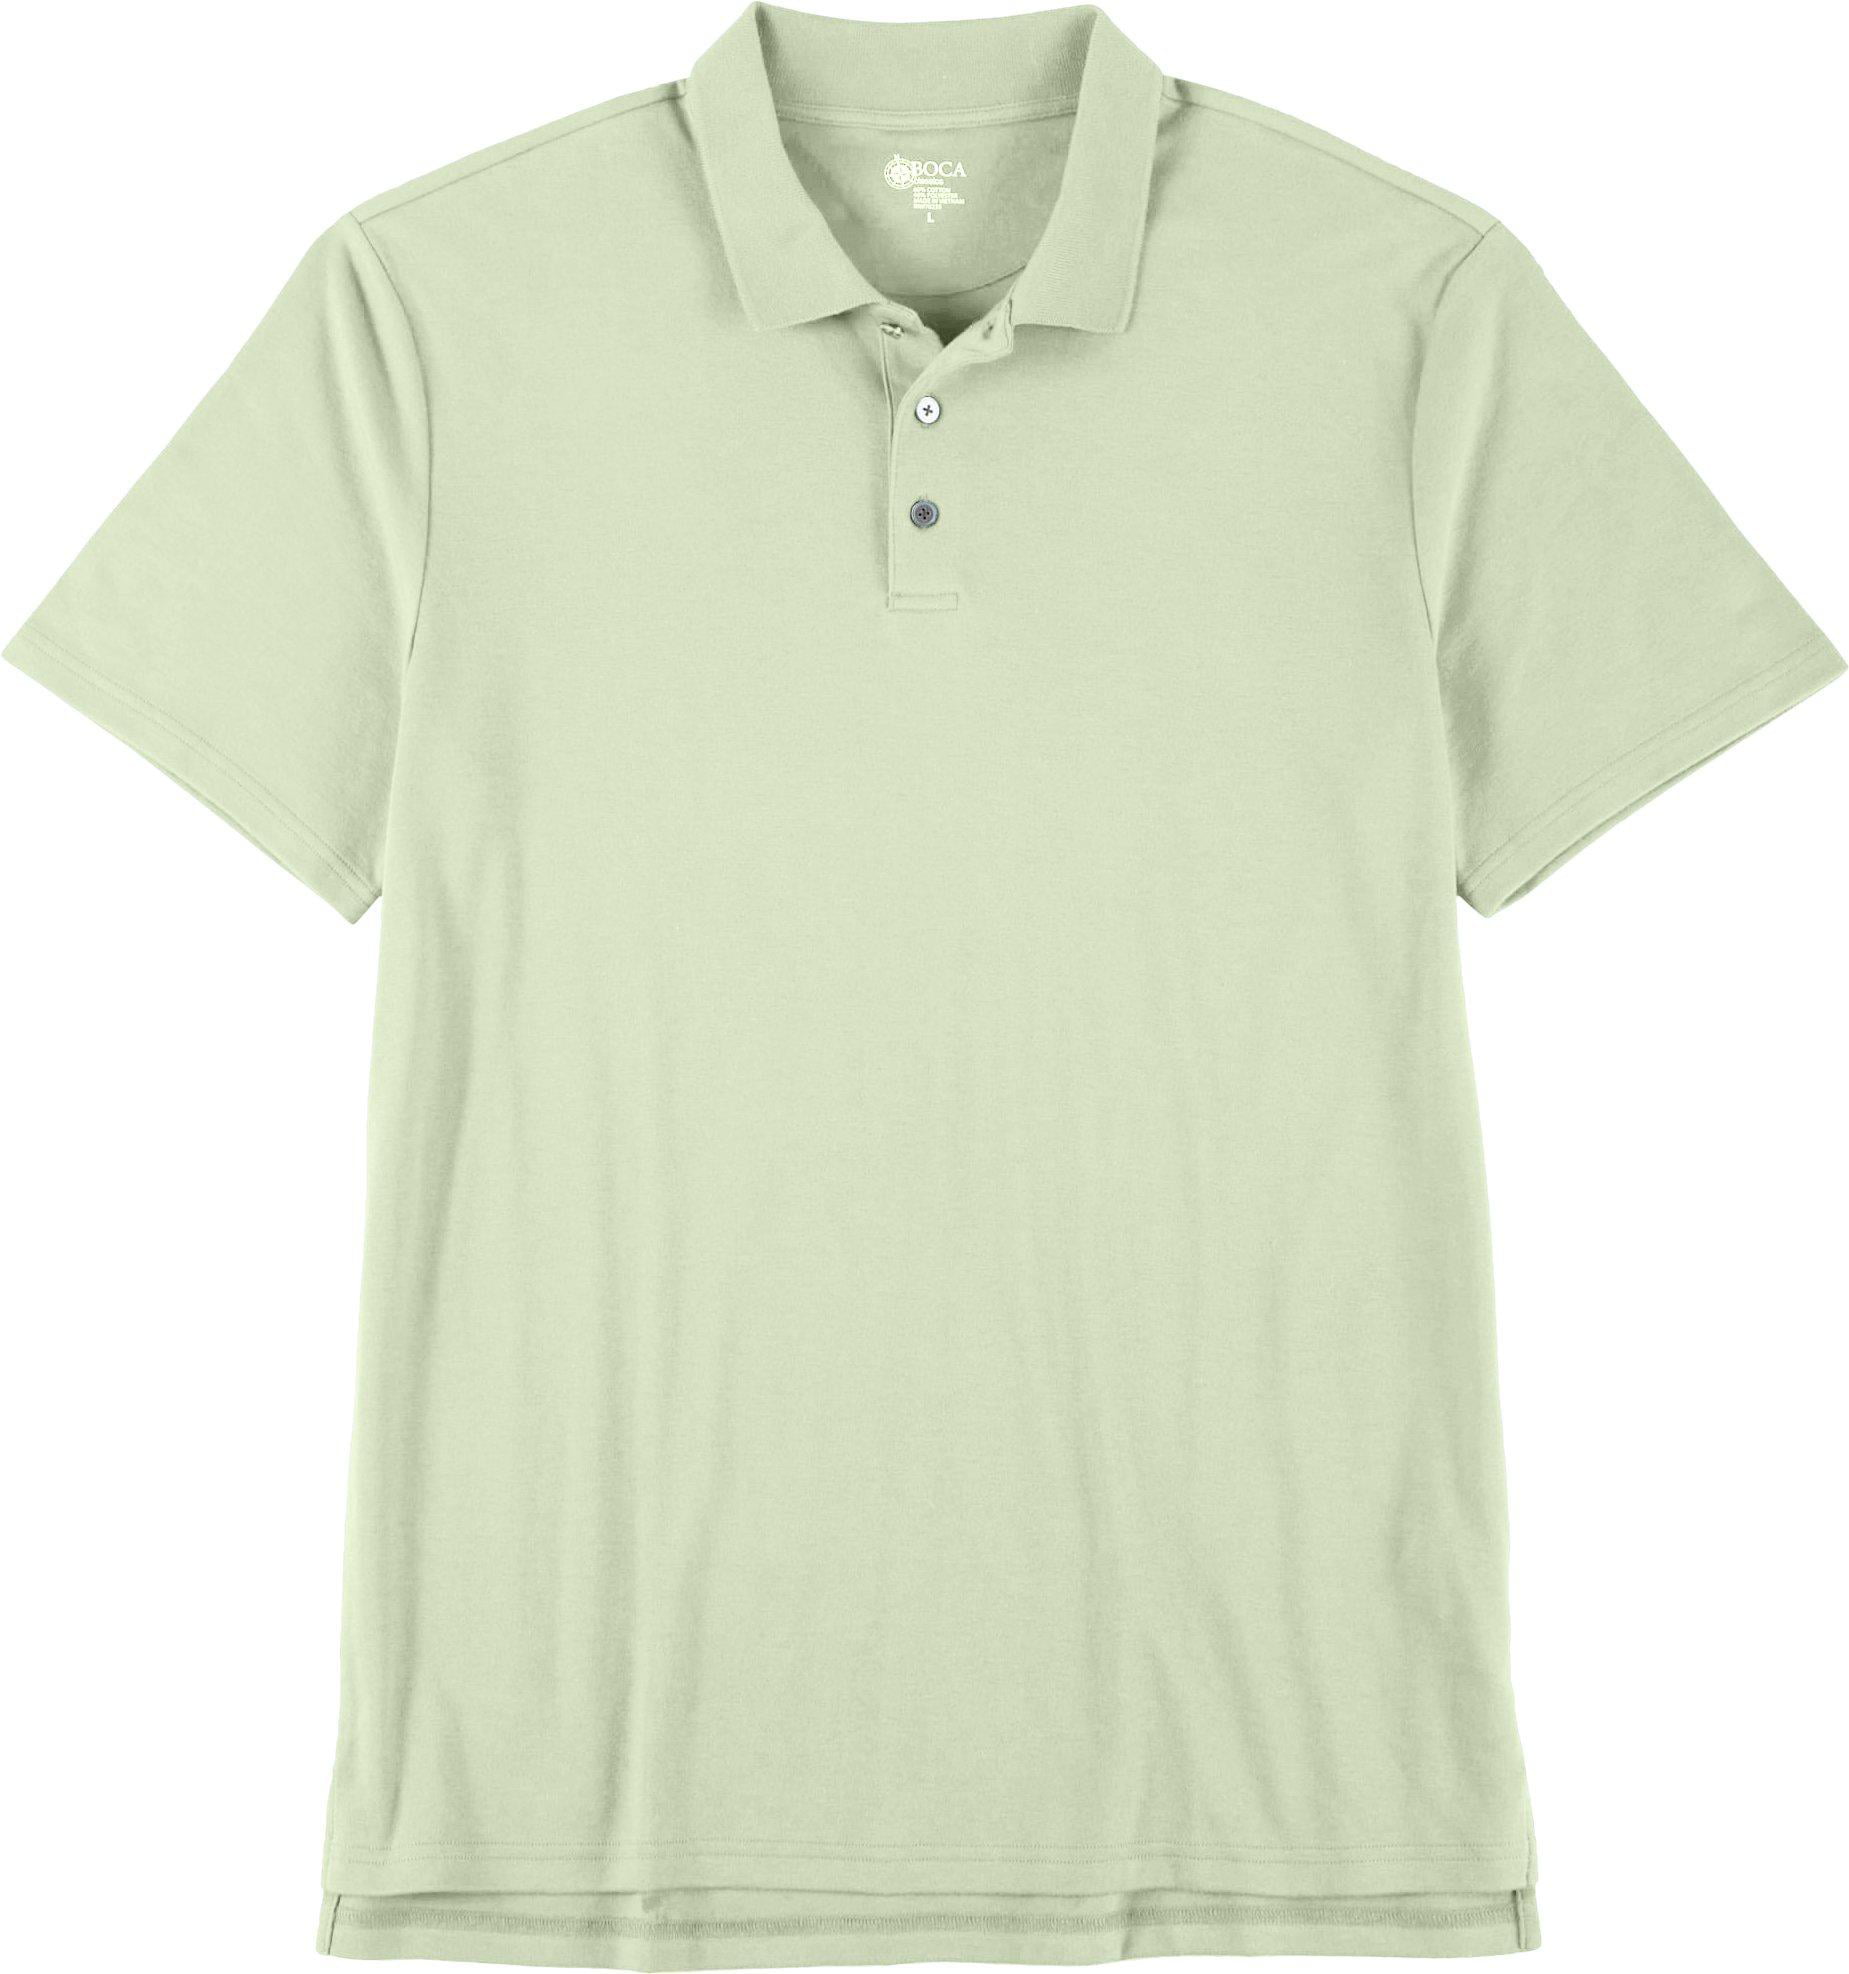 Kappa Basic Polo Shirt Mens Gents Classic Fit Tee Top Short Sleeve Lightweight 